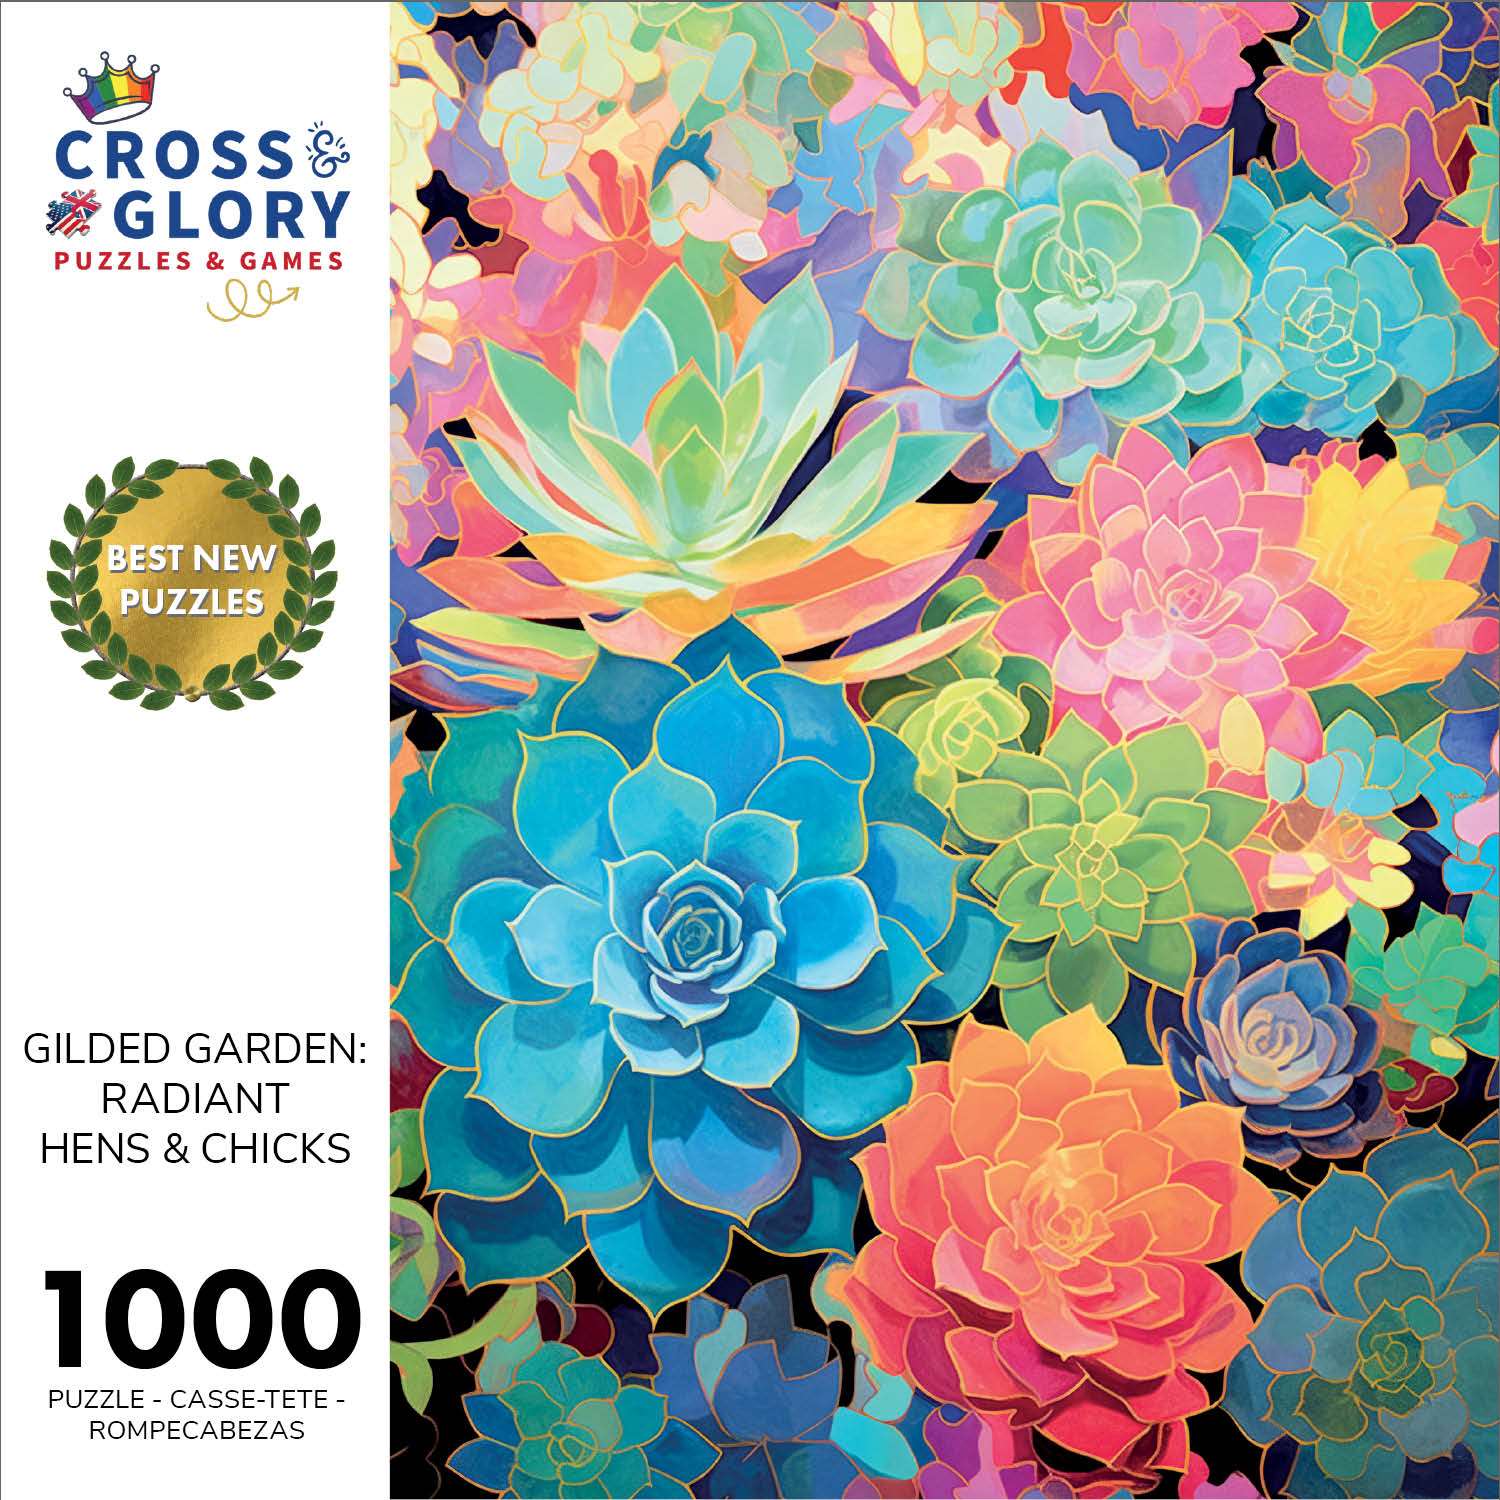 Gilded Garden: Radiant Hens & Chicks - 1000 Piece Jigsaw Puzzle